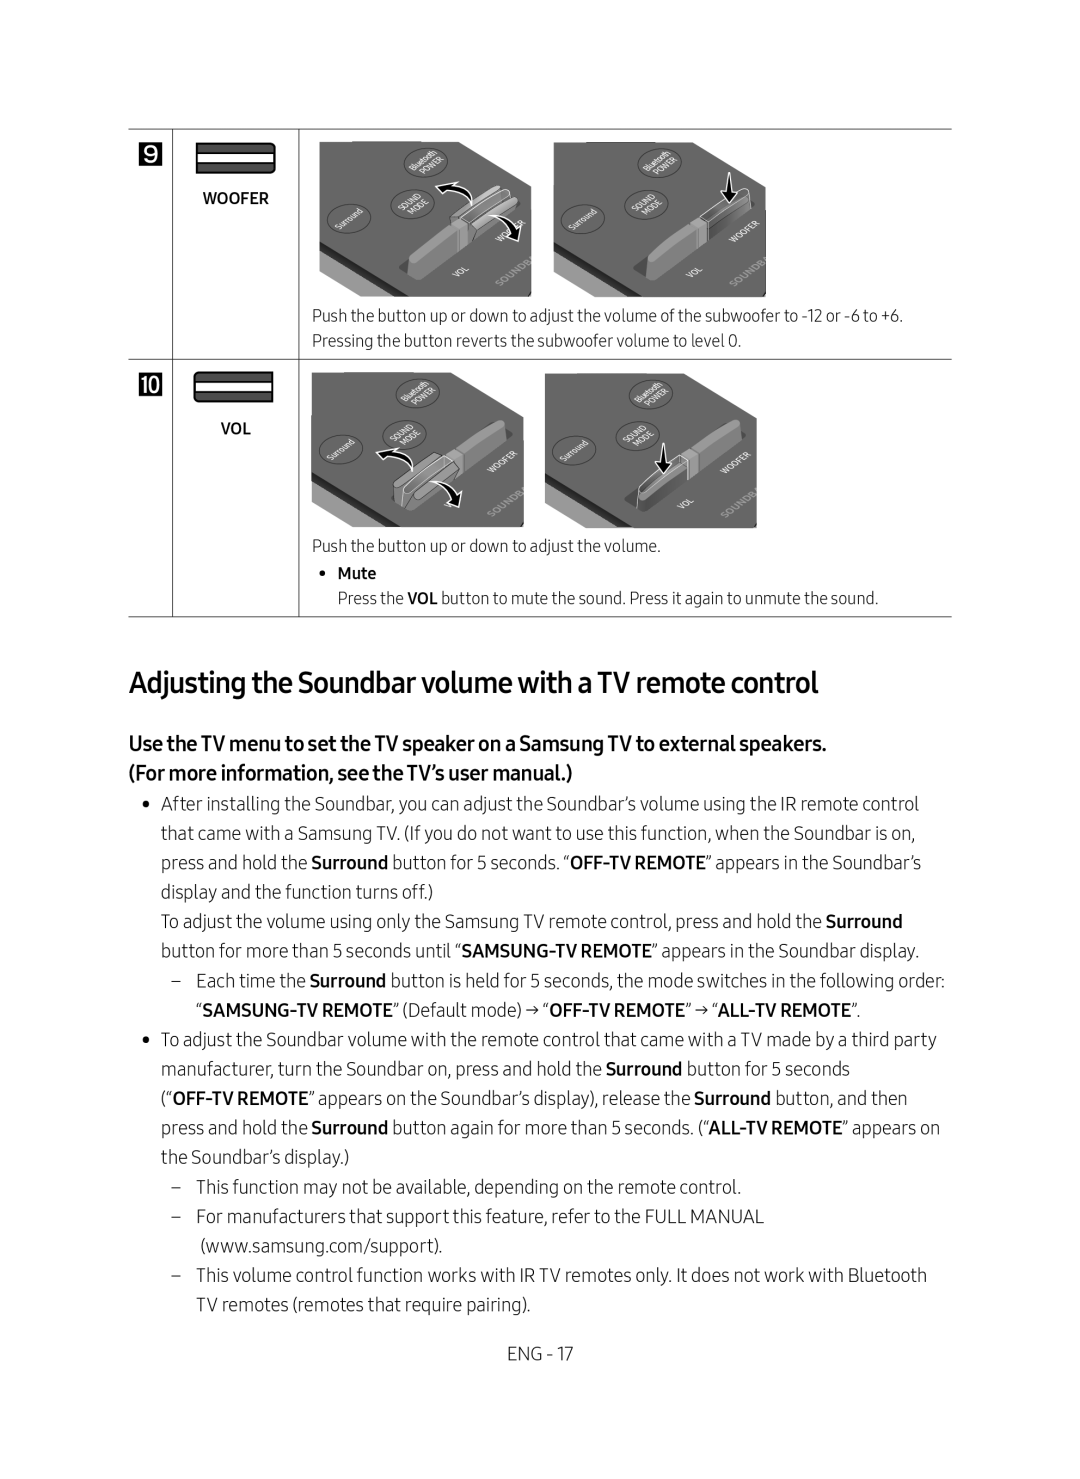 Samsung HW-M4501/ZF manual Adjusting the Soundbar volume with a TV remote control, Mute 